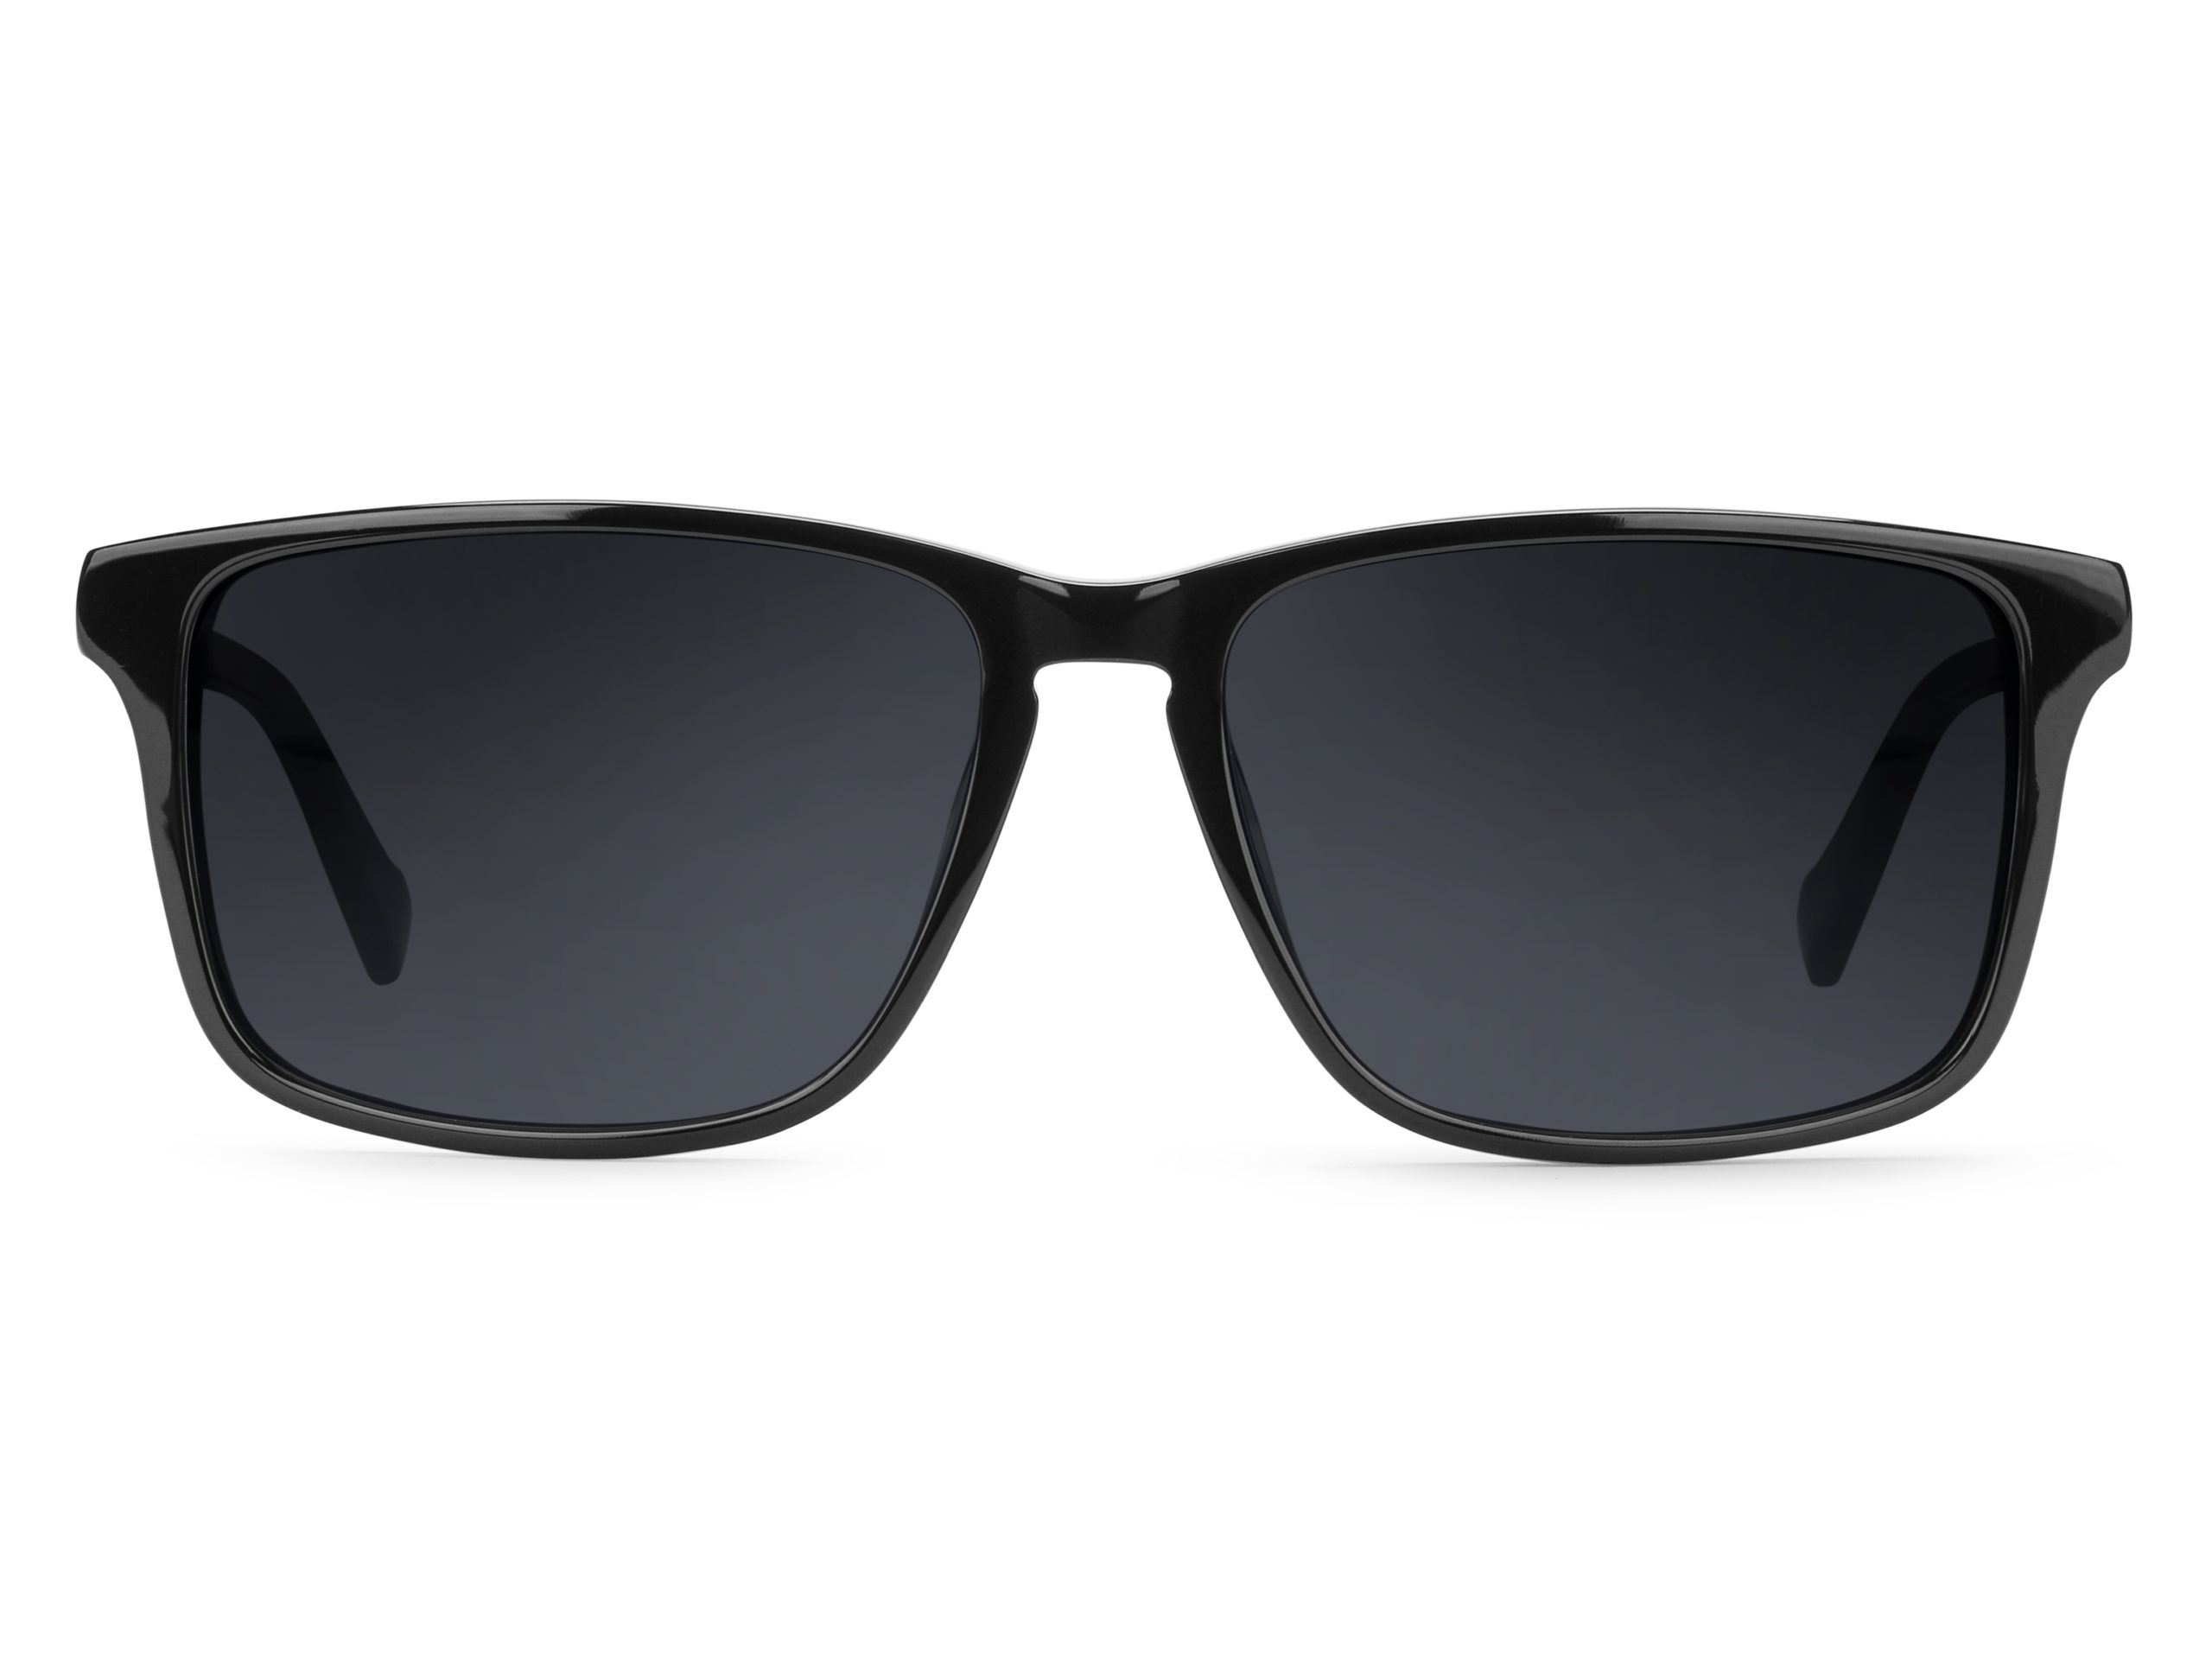 Matt Black Ruthen Classic Style Sunglasses with Case Pierre Cardin 